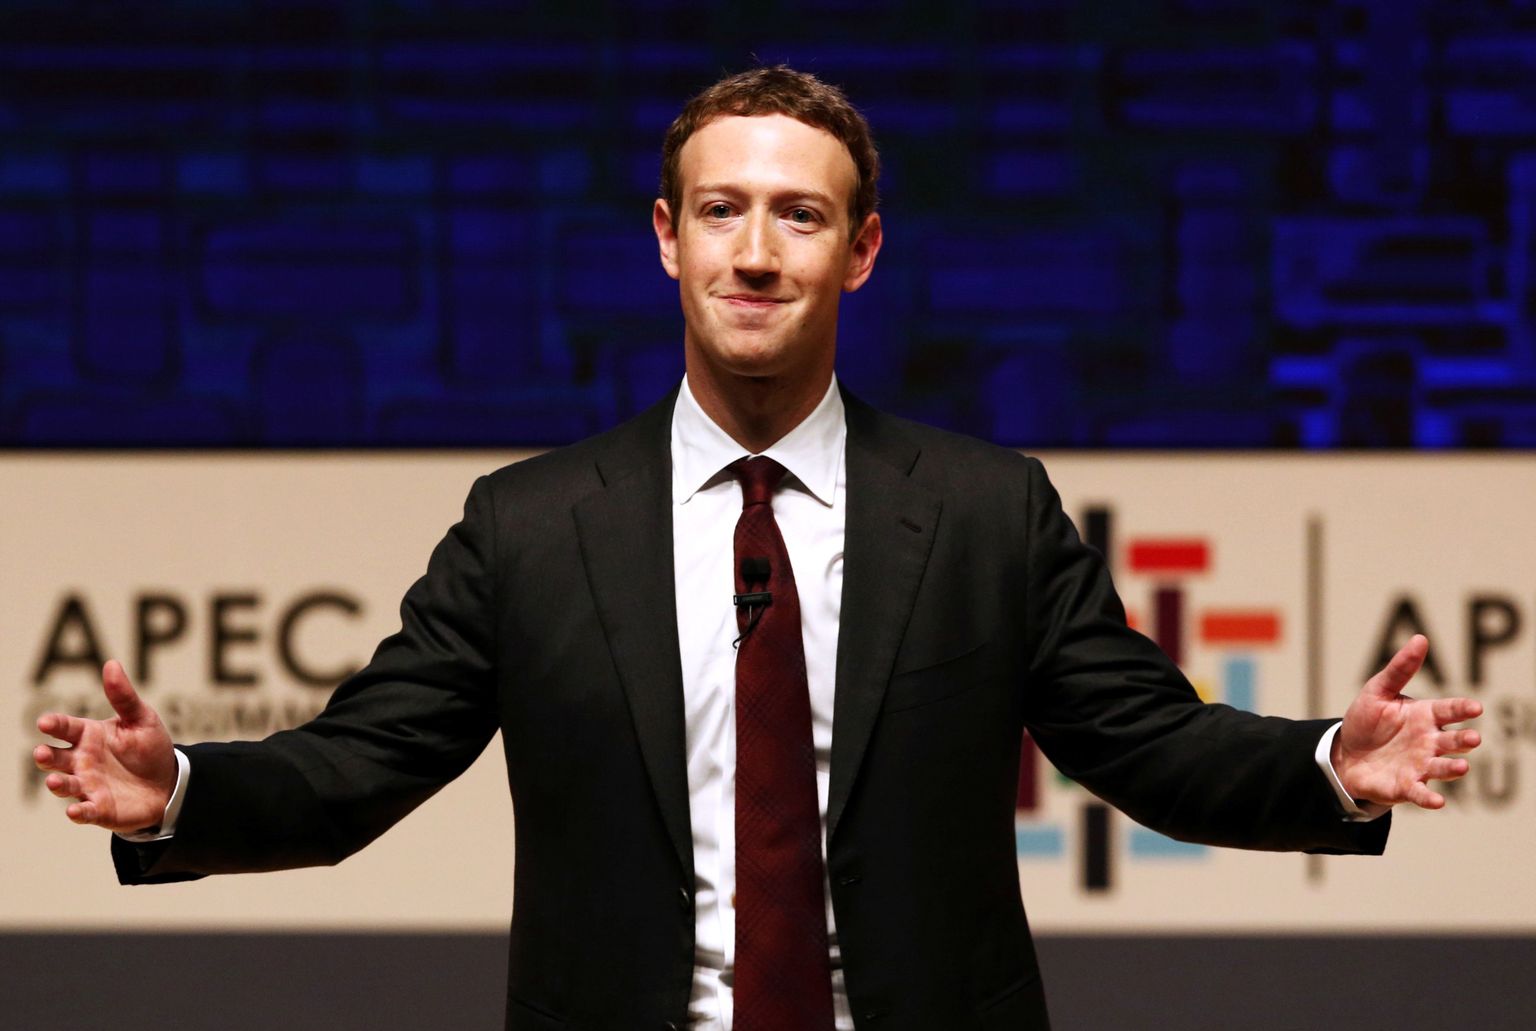 Mark Zuckerberg APECi foorumil esinemas.